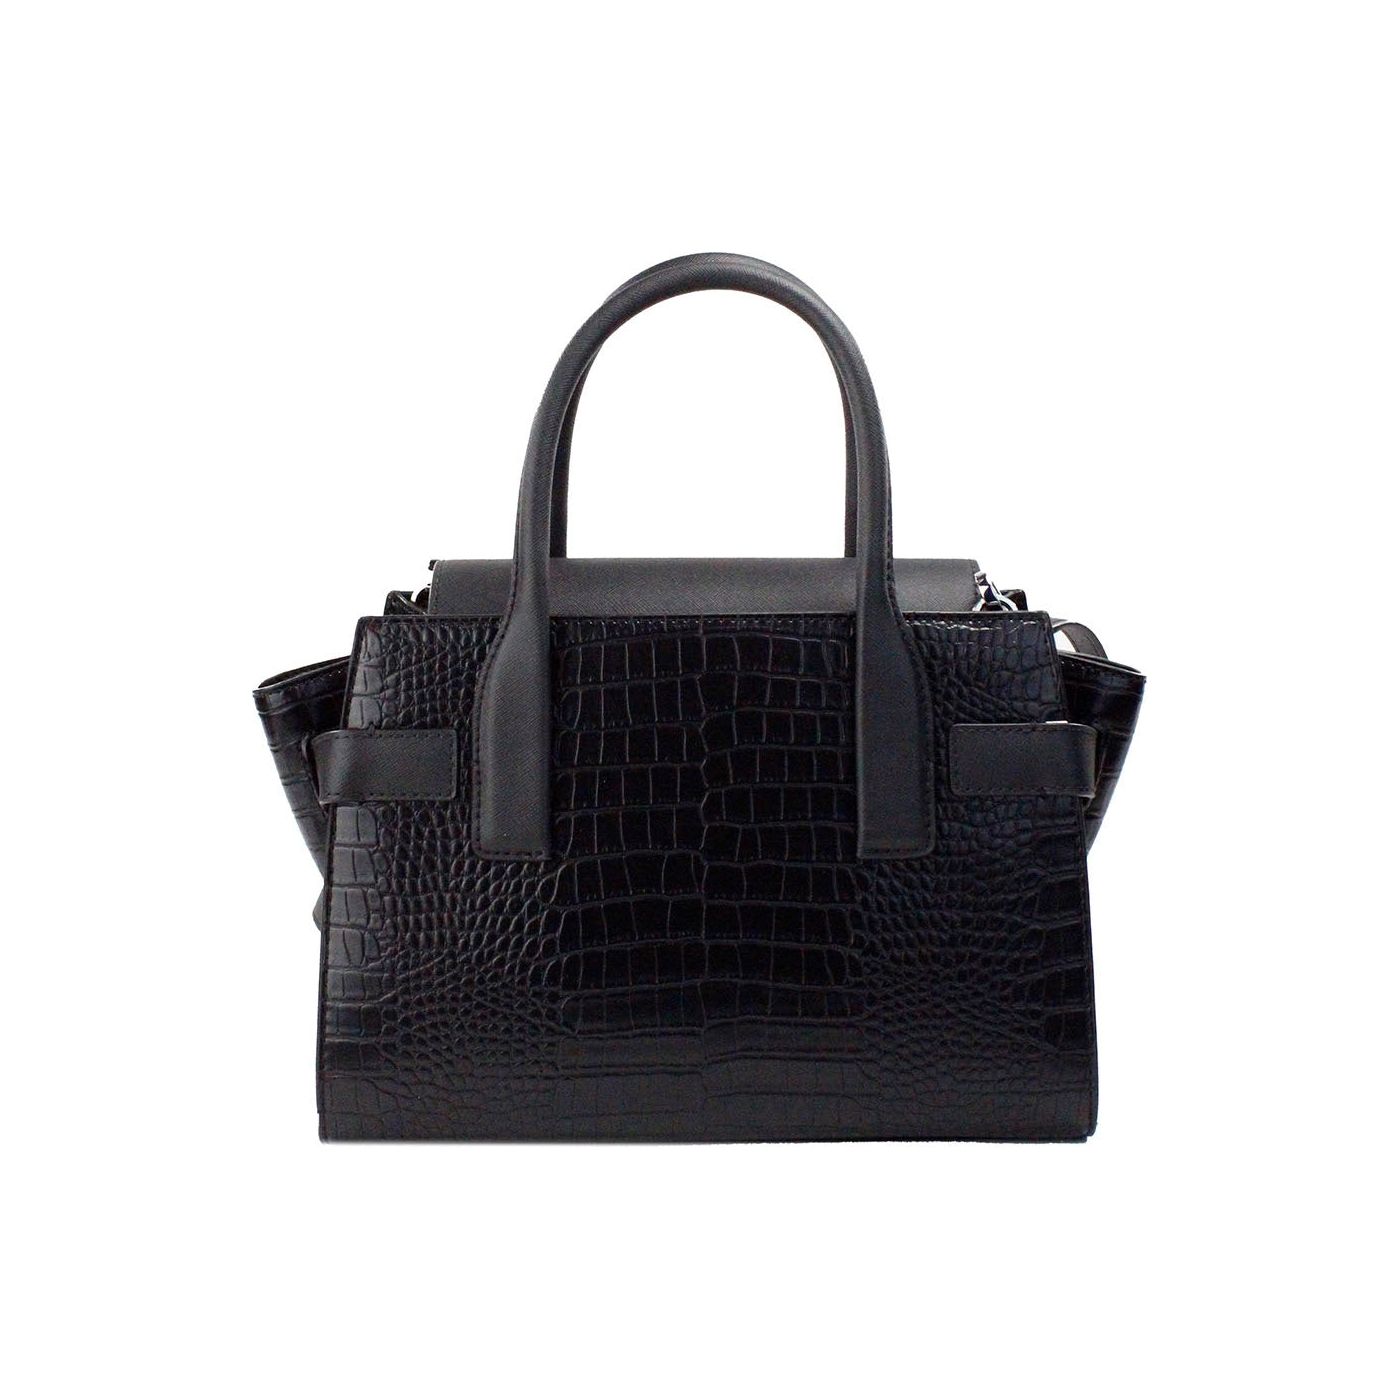 Michael Kors Carmen Medium Black Embossed Leather Satchel Purse Bag carmen-medium-black-embossed-leather-satchel-purse-bag